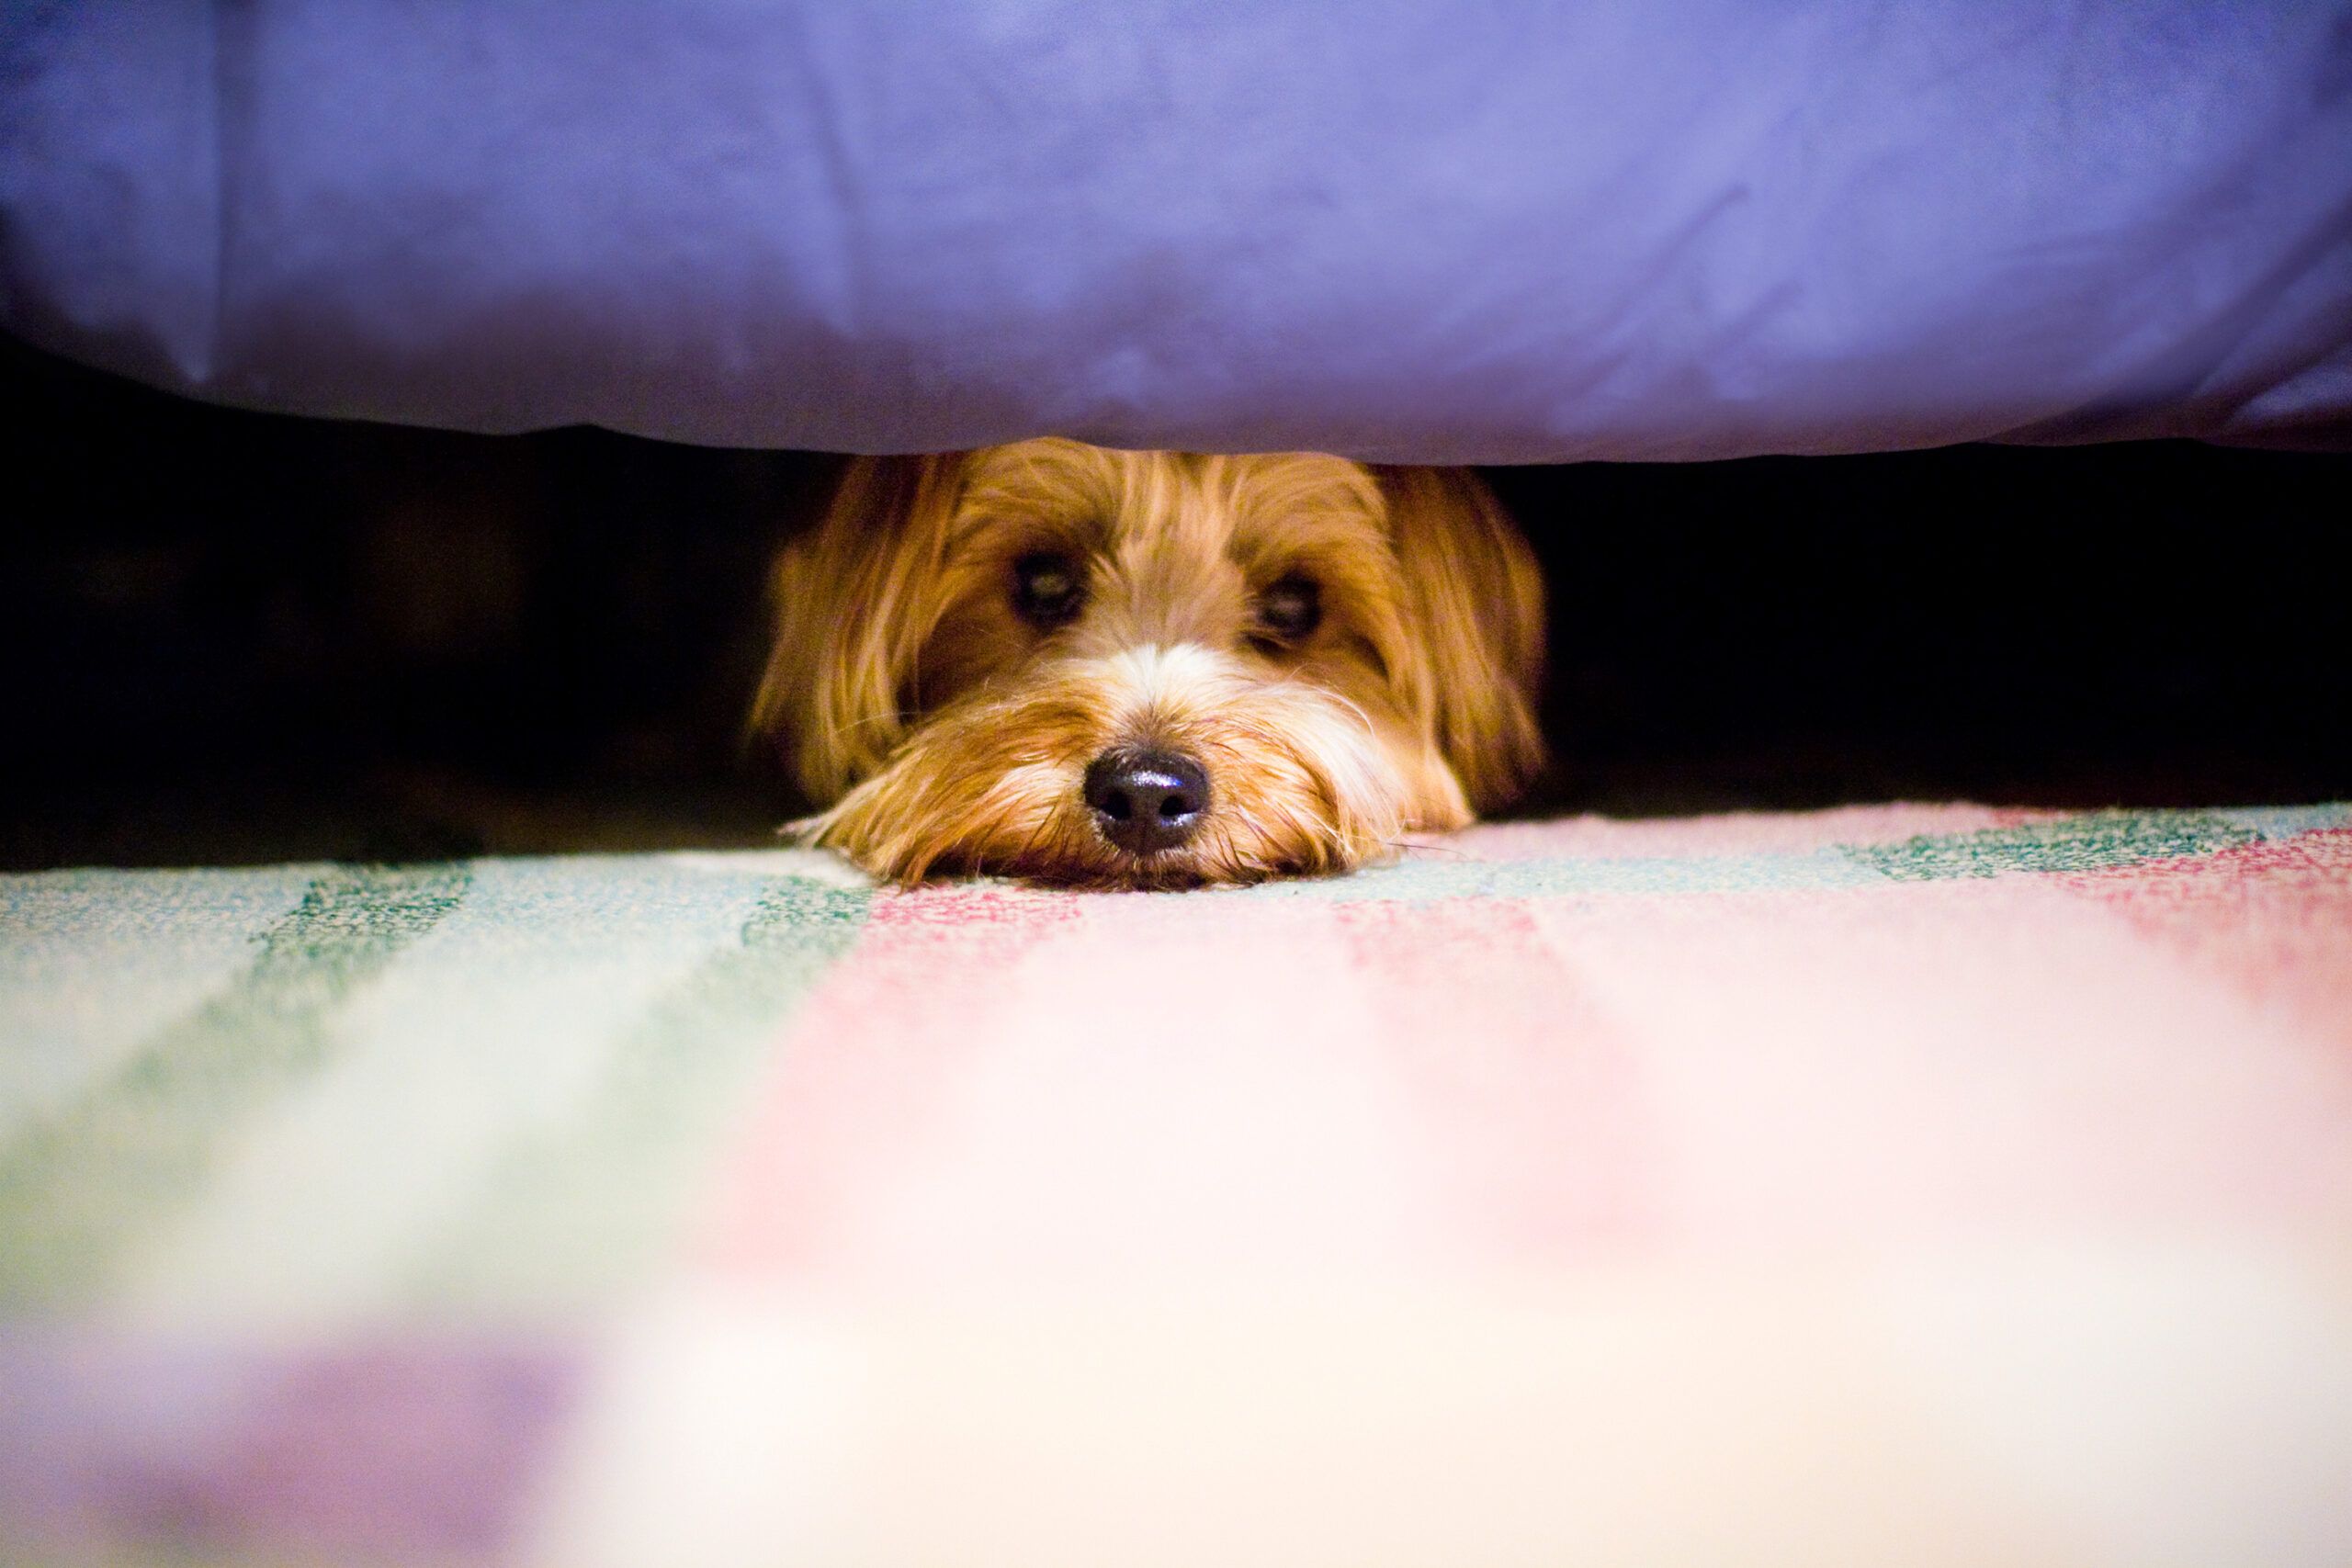 dog_under_bed